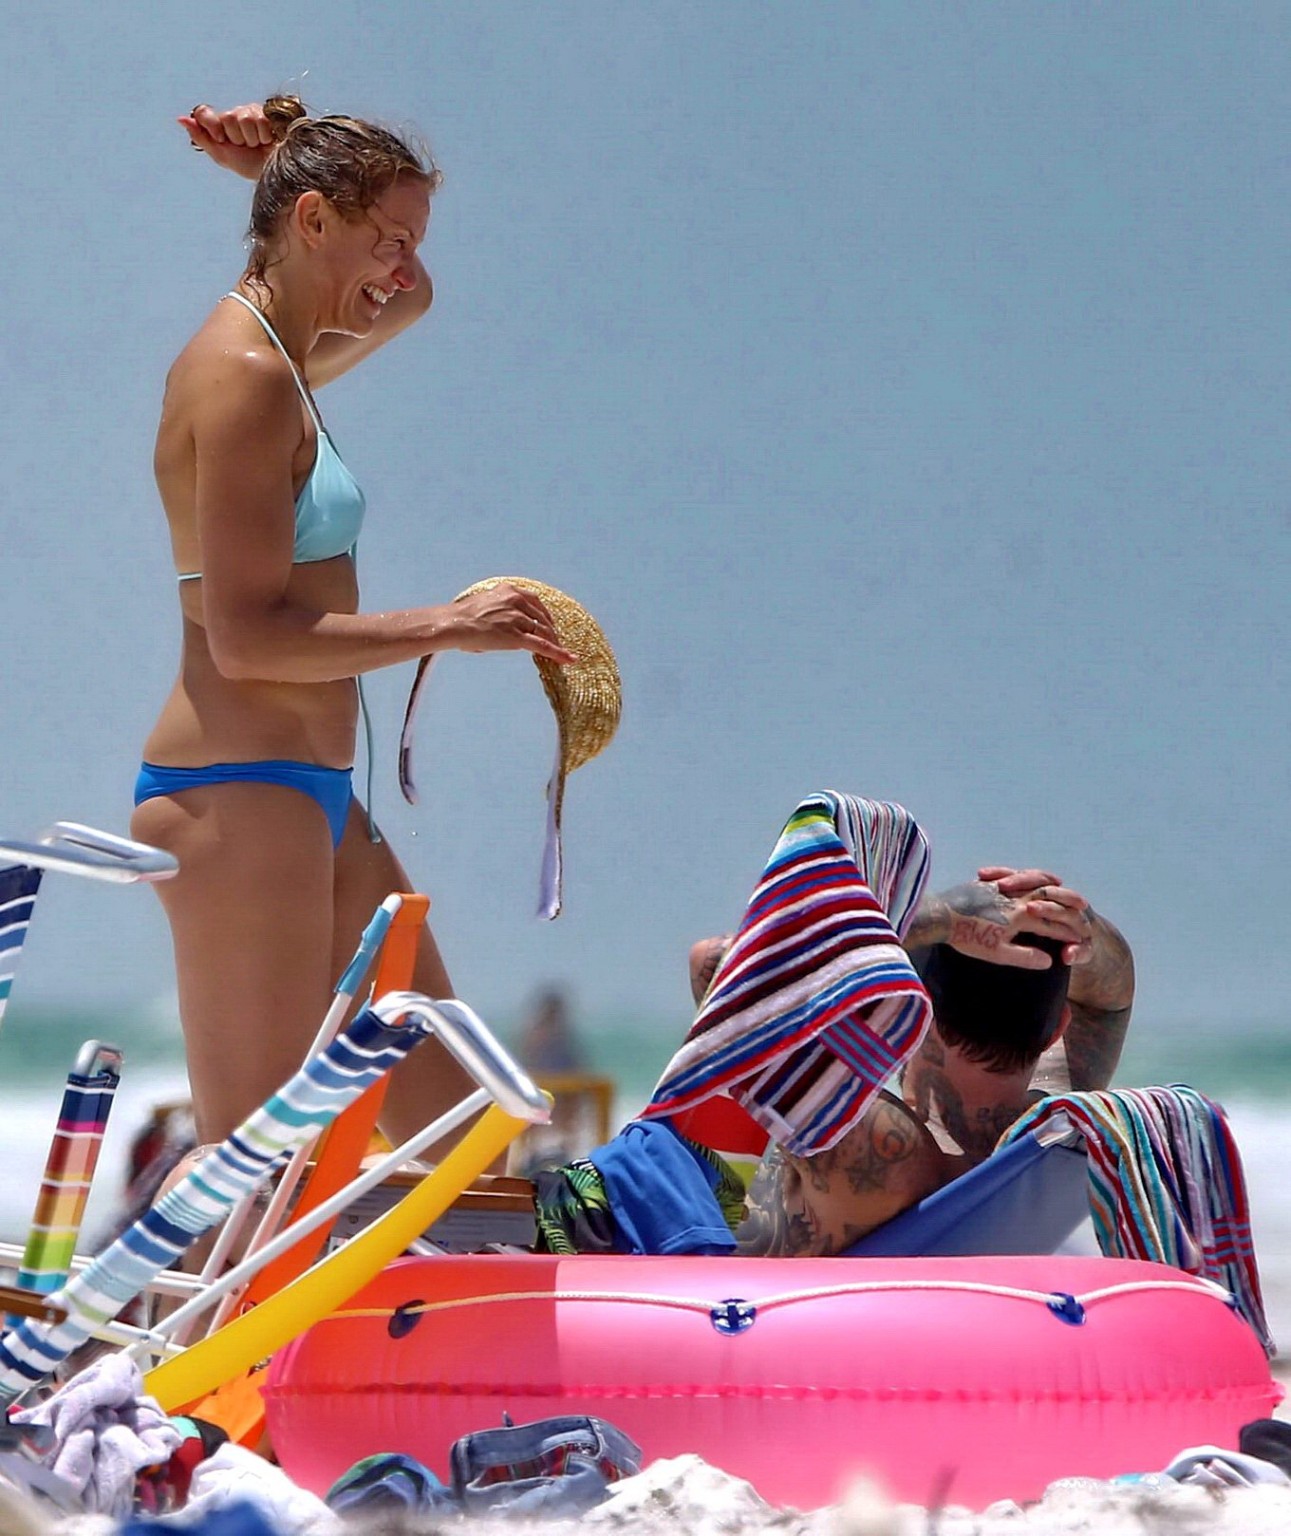 Cameron Diaz Shows Ass Crack Wearing A Skimpy Bikini On A Beach In Florida Porn Pictures Xxx